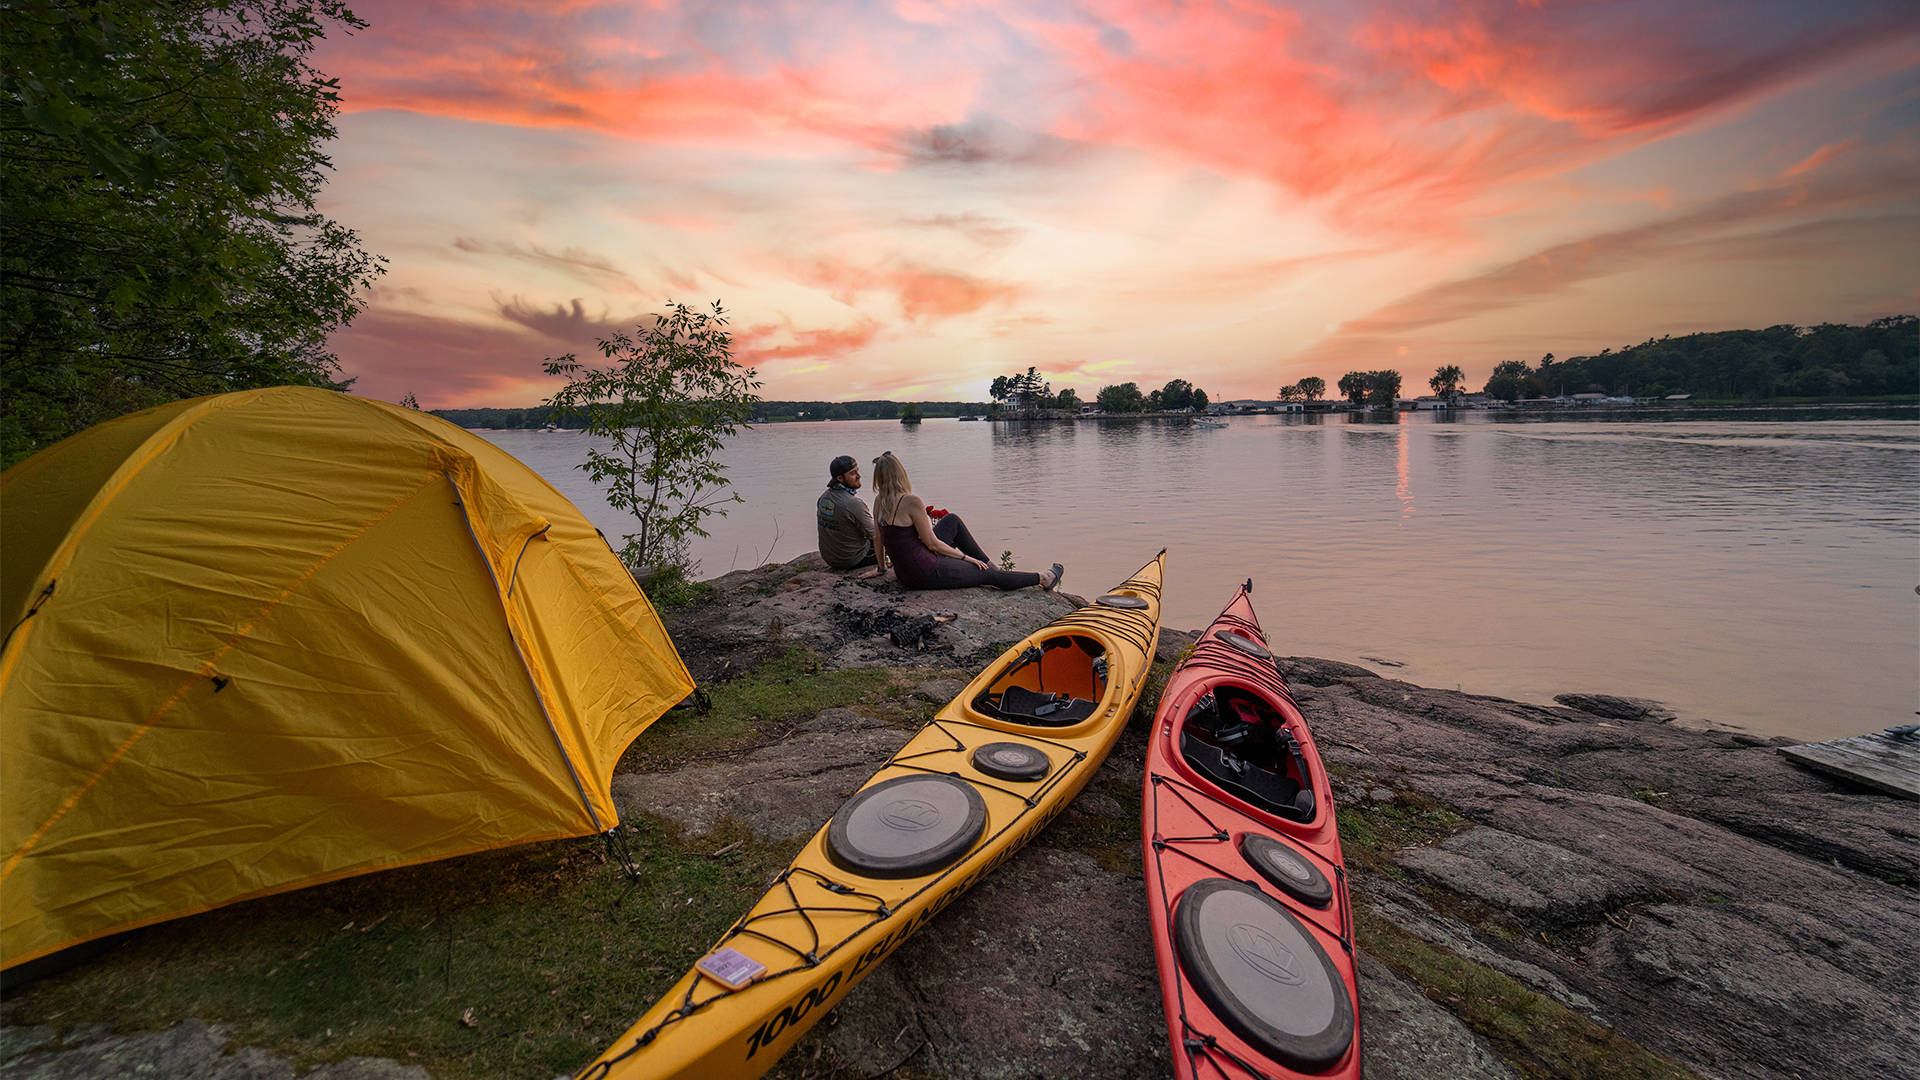 Camping And Kayaking Trip Wallpaper